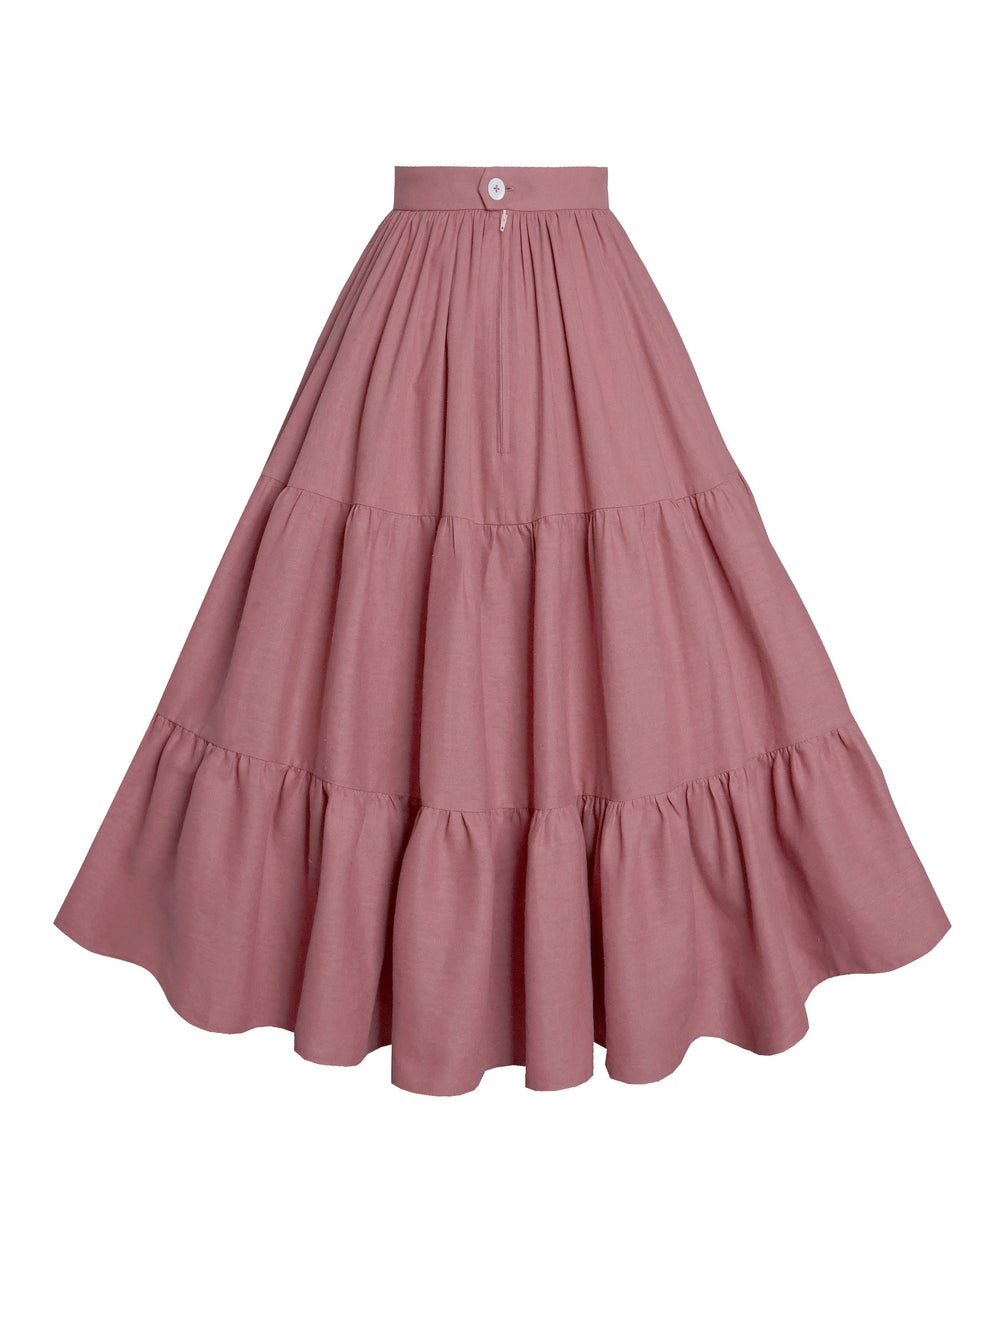 MTO - Pippa Skirt in Antique Rose Linen